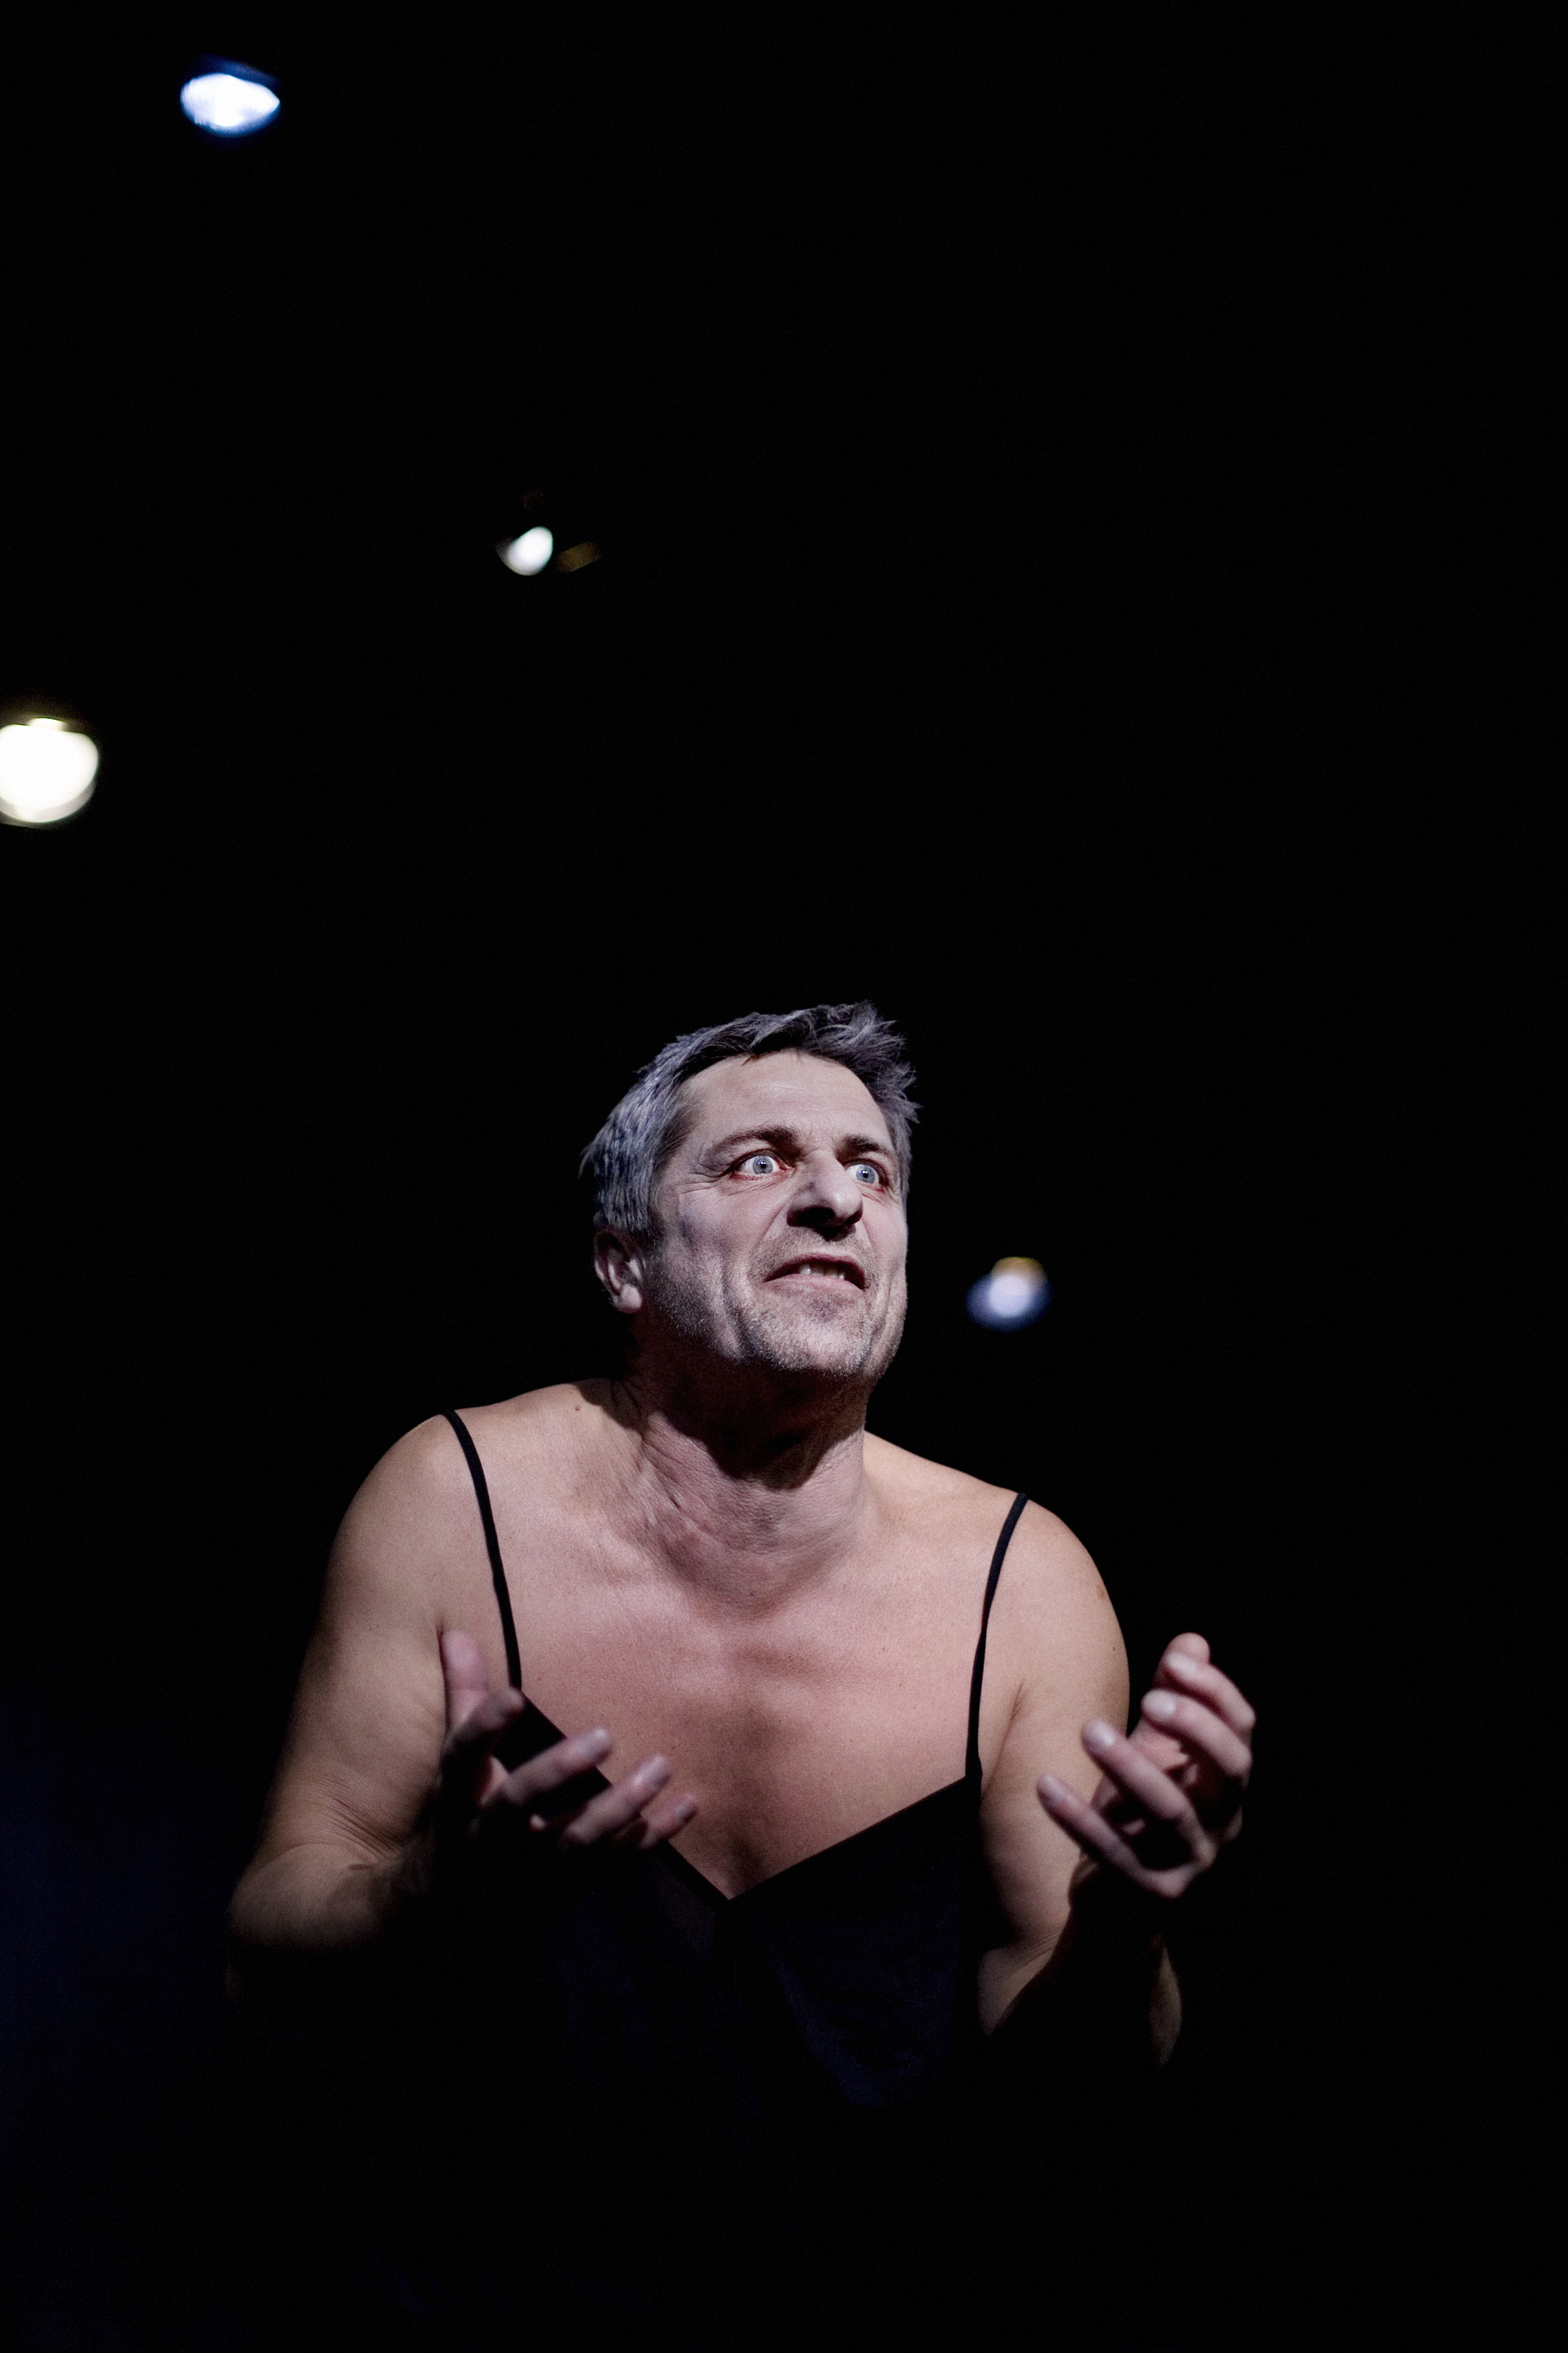 Ole Forsberg som Fröding i Kärleksköparen - Fröding naked, premiär 27 september på Bryggan/Marionetteatern, Stockholms stadsteater